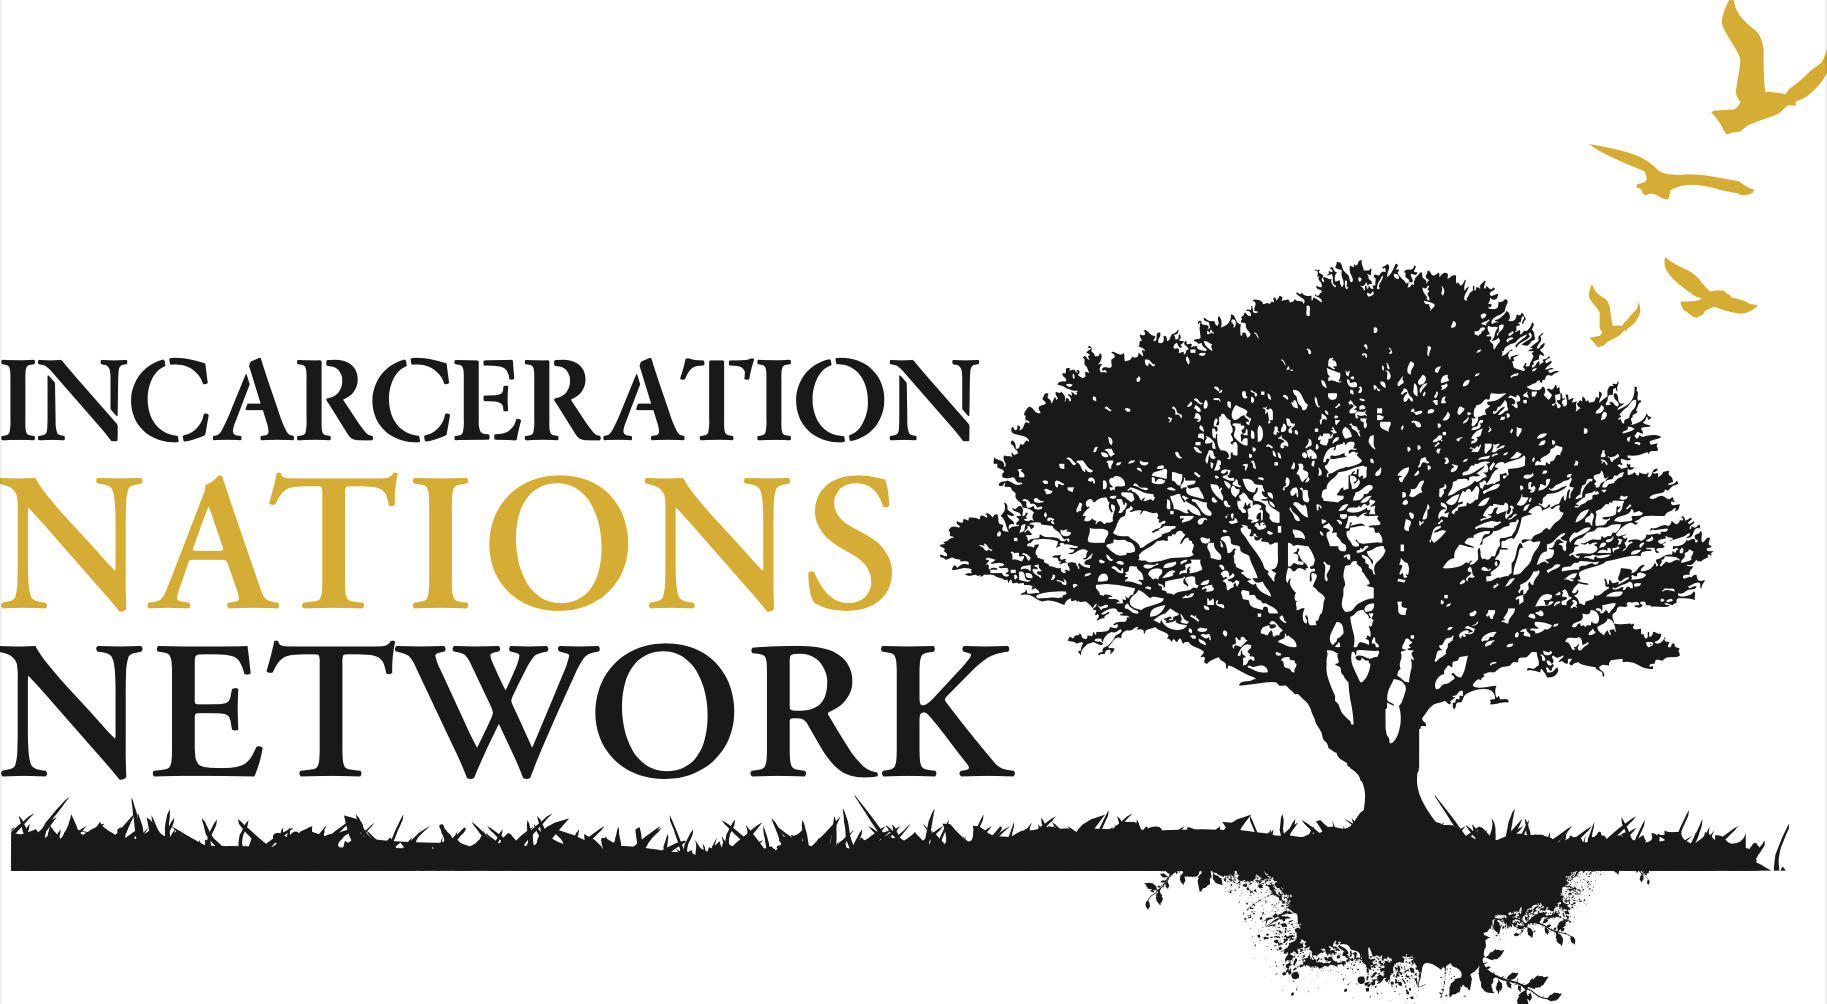 Incarceration Nations Network